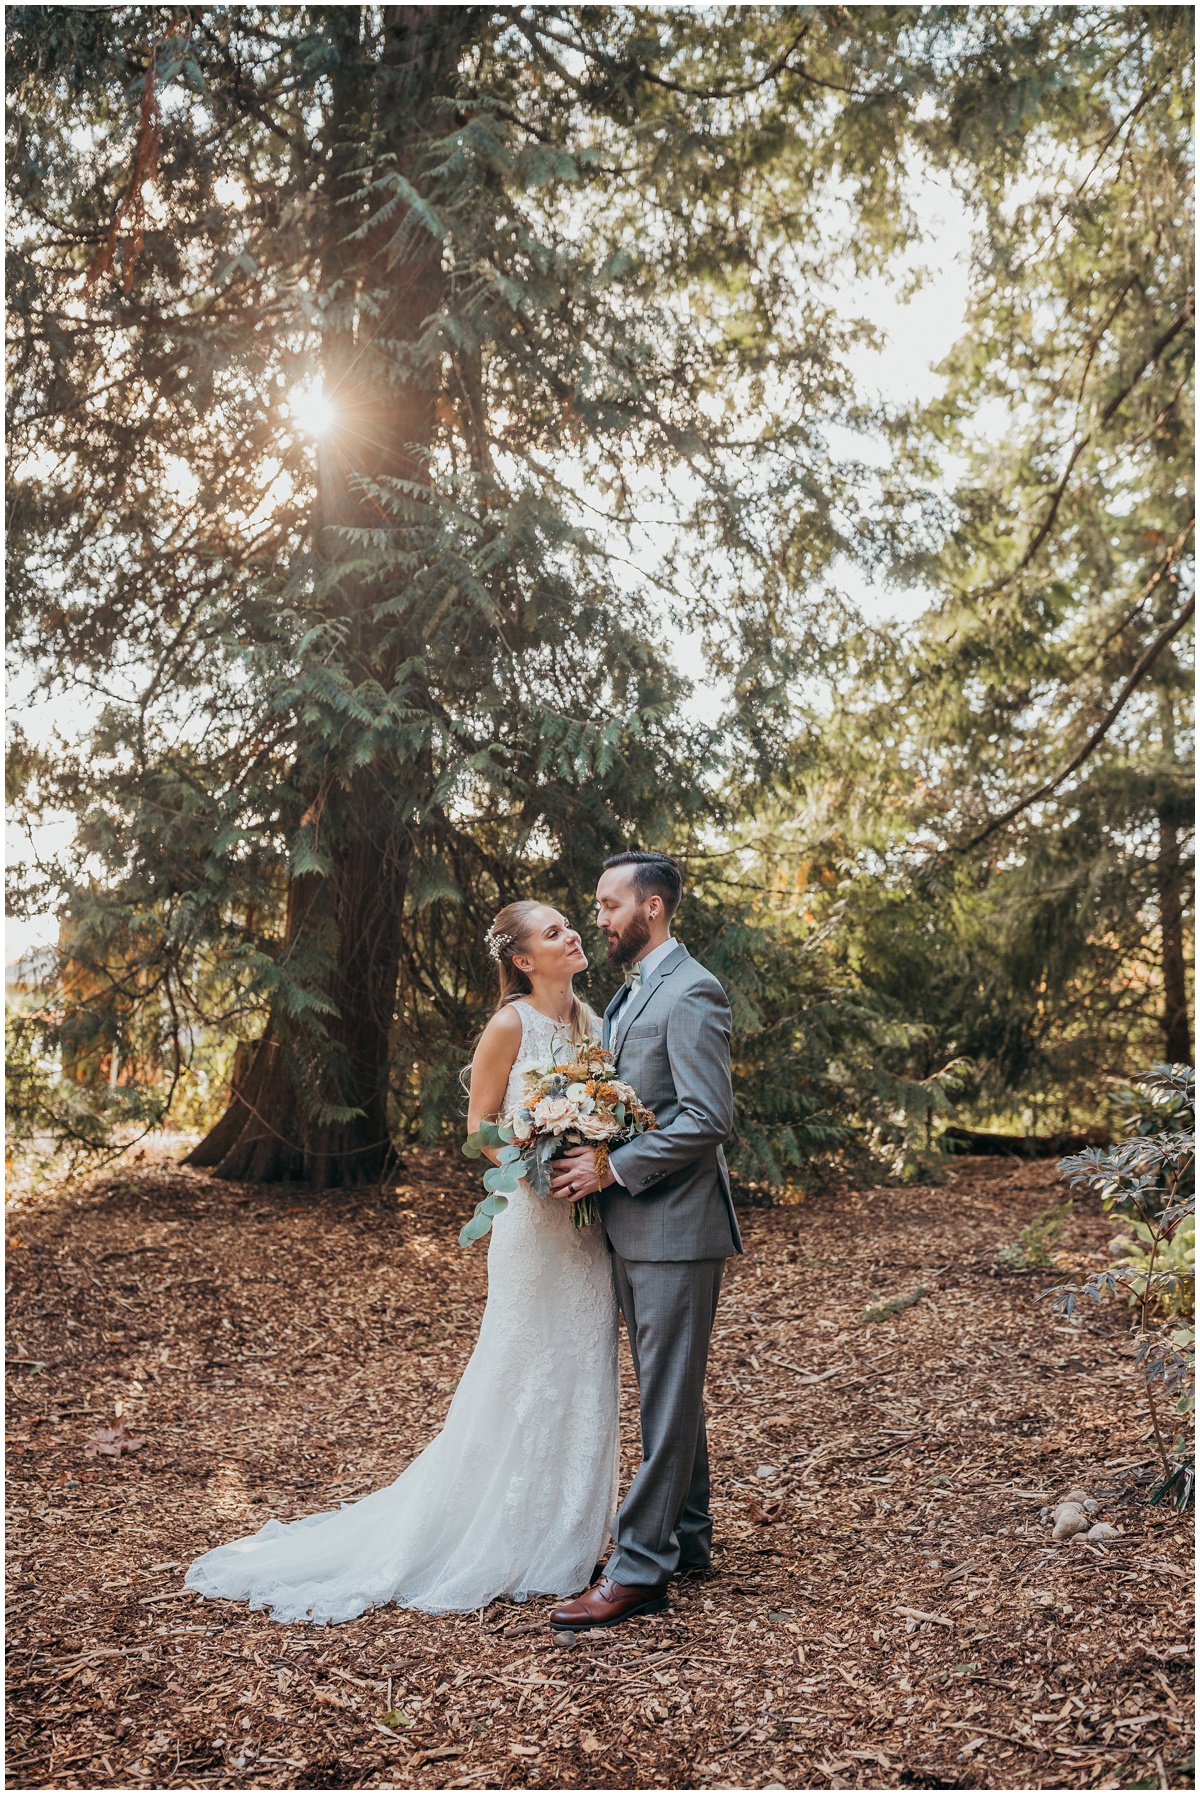 photo of bride and groom with sun in trees | glenwood treefarm tacoma washington photographer